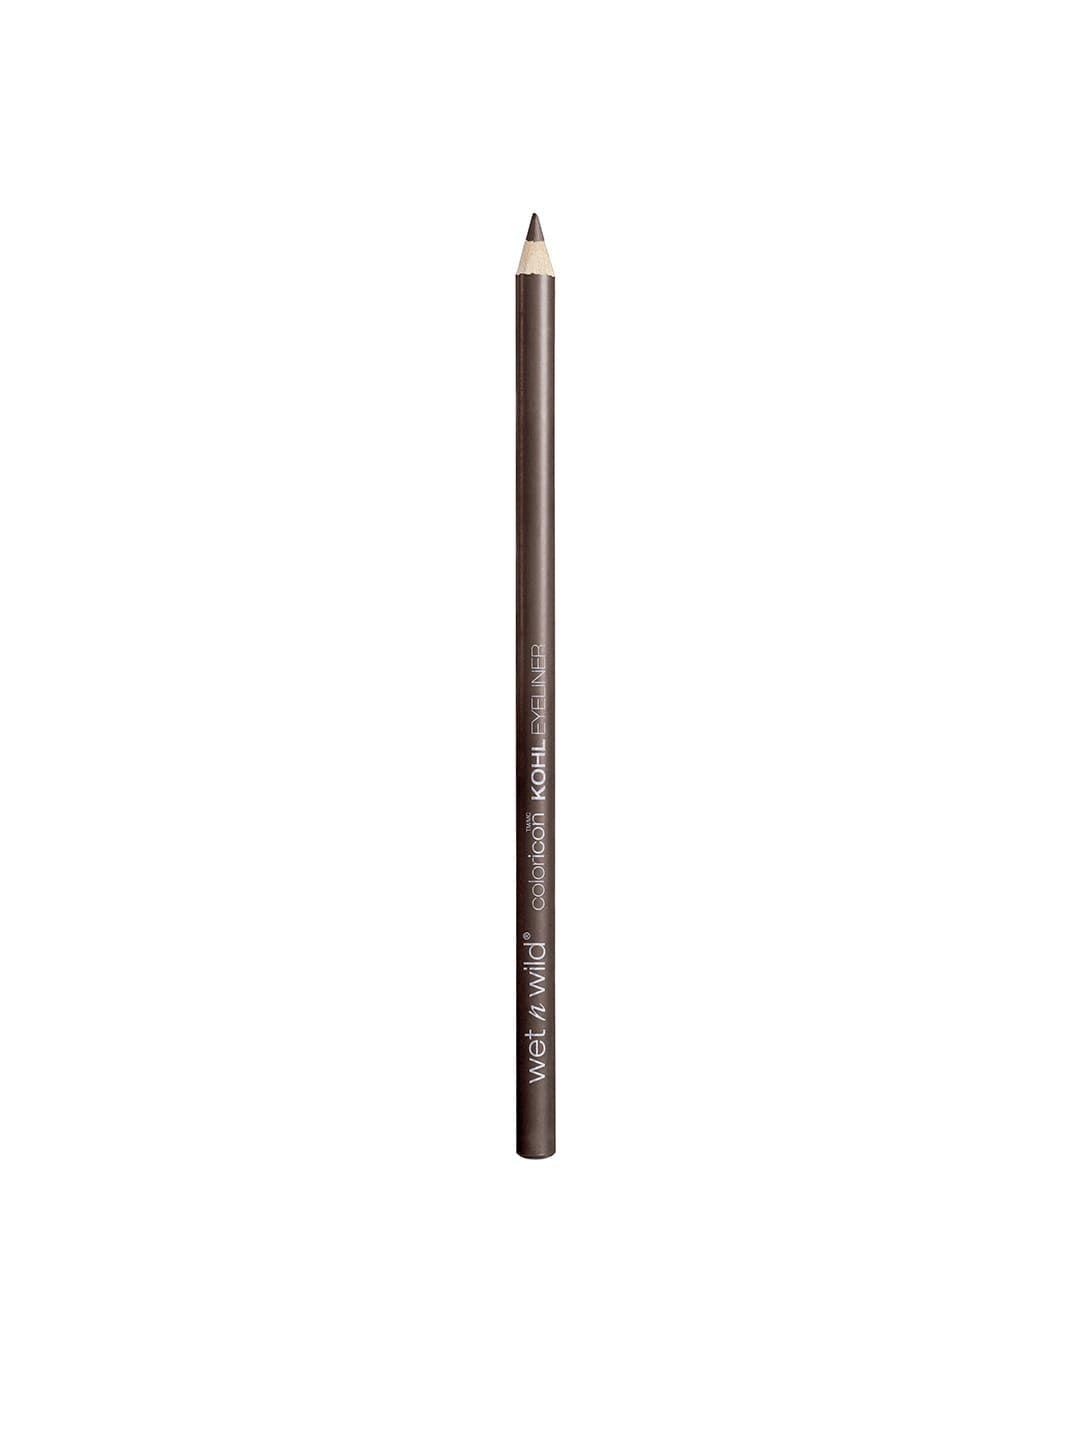 wet-n-wild-color-icon-kohl-liner-pencil---pretty-in-mink-e602a-1.4g